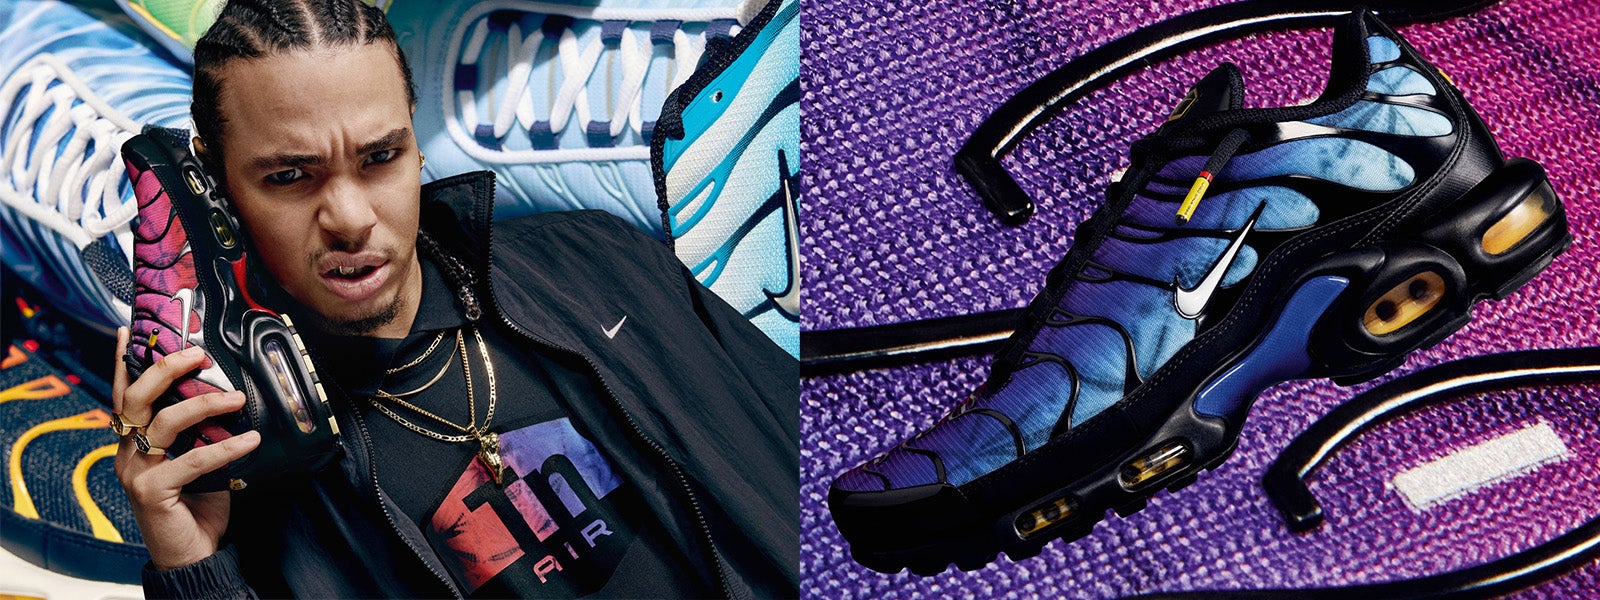 Nouveautés Garçons Vêtements. Nike FR